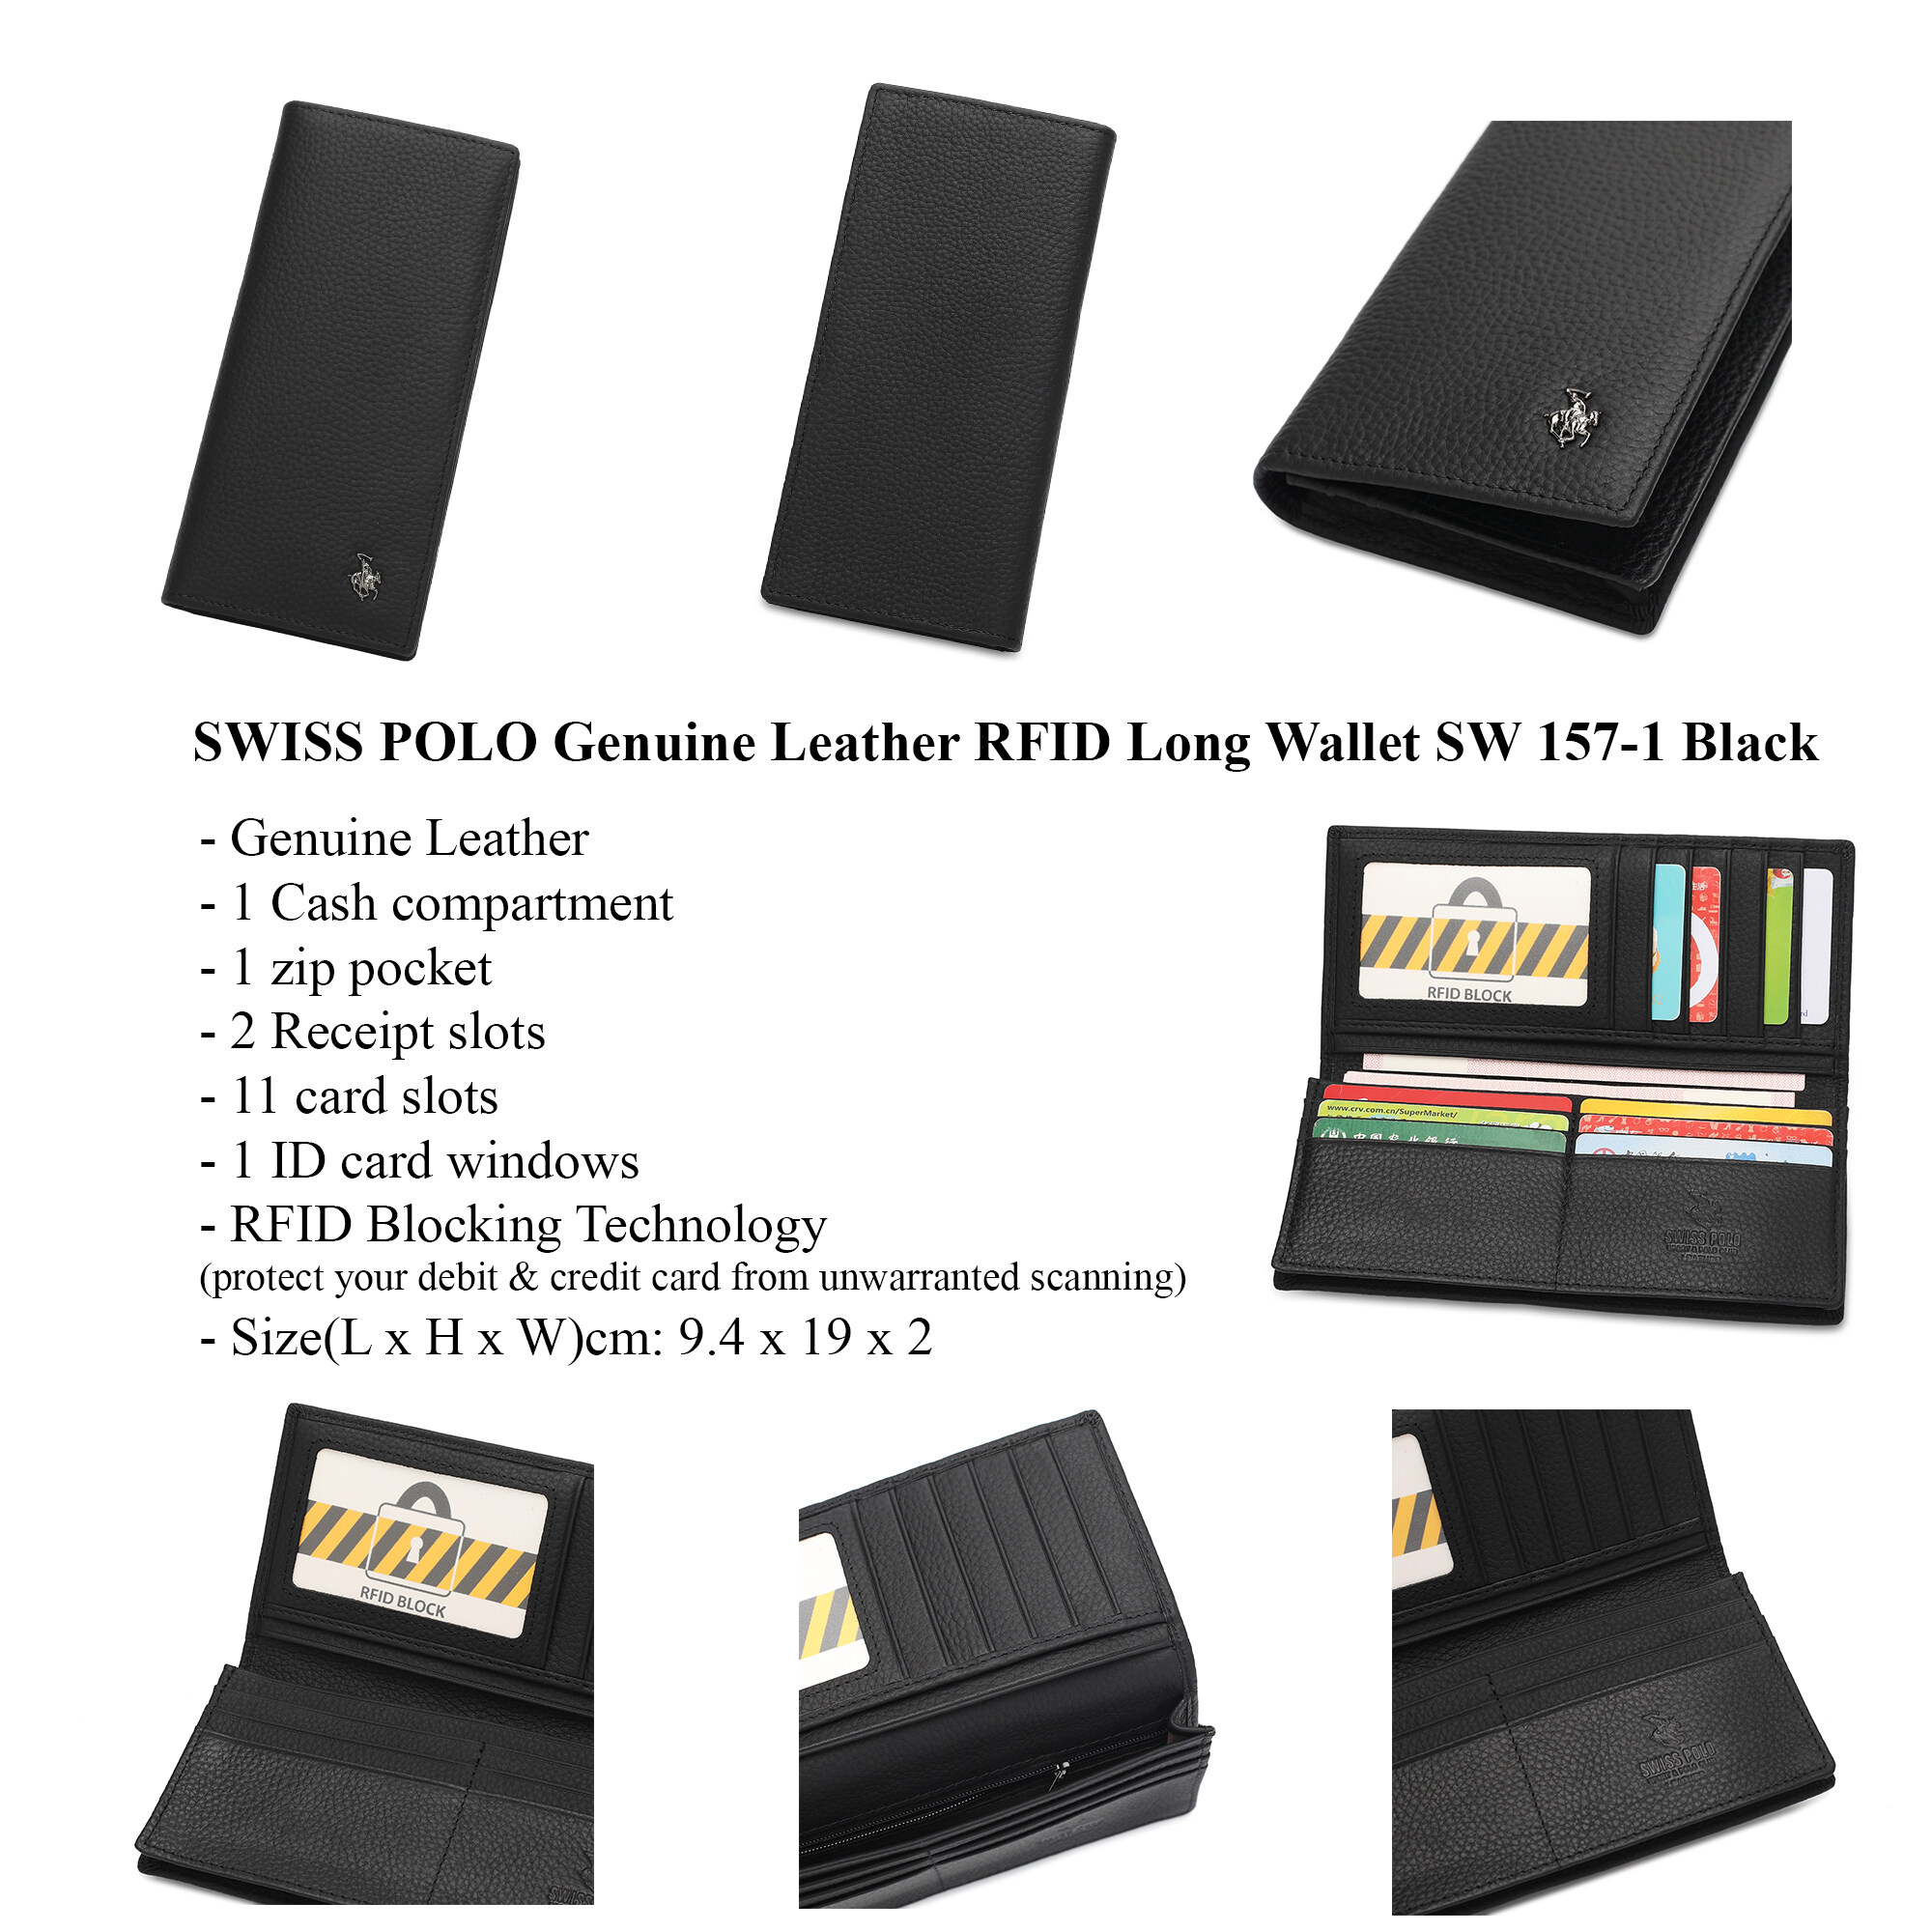 SWISS POLO Genuine Leather RFID Long Wallet SW 157-1 BLACK